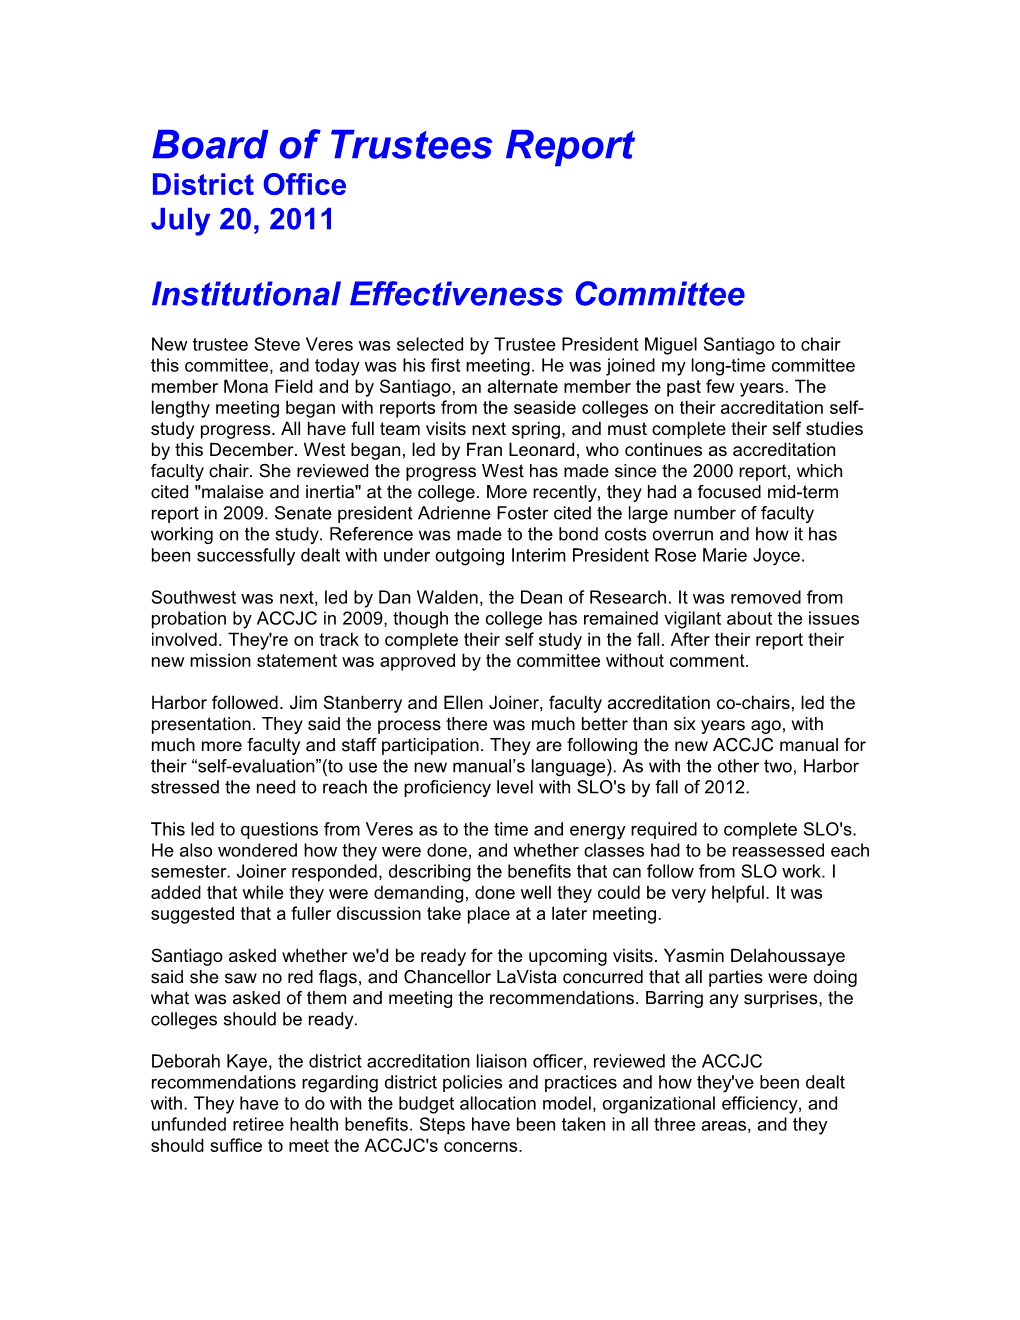 Board of Trustees Report s3